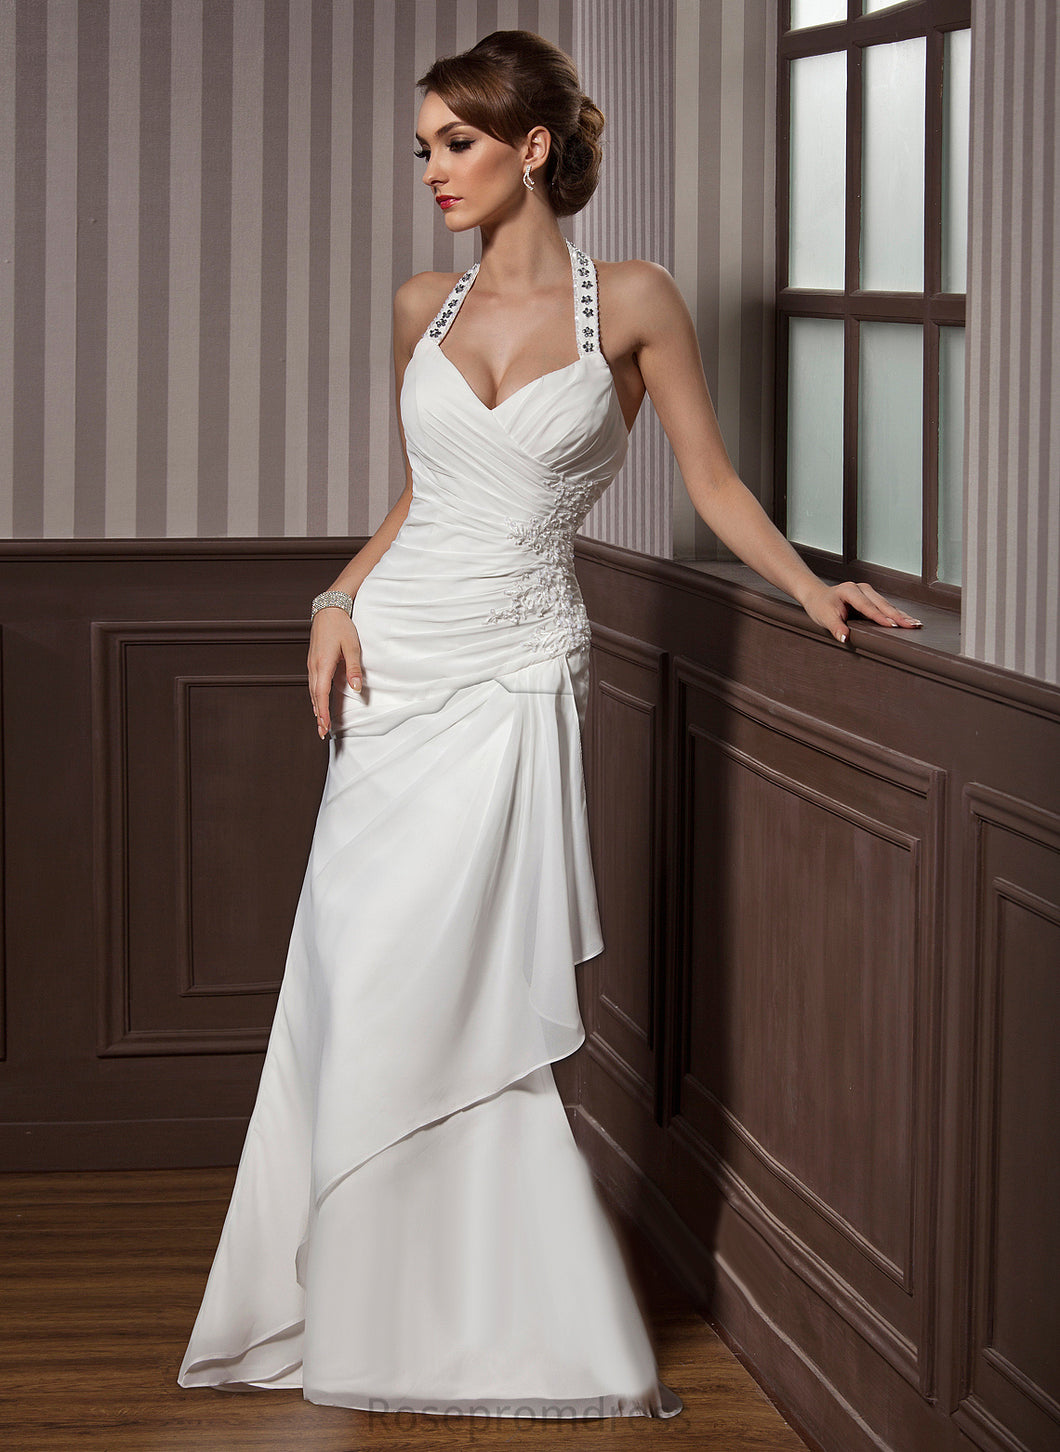 Wedding Appliques Sheath/Column Dress Halter Chiffon Valentina With Wedding Dresses Sequins Floor-Length Beading Ruffle Lace